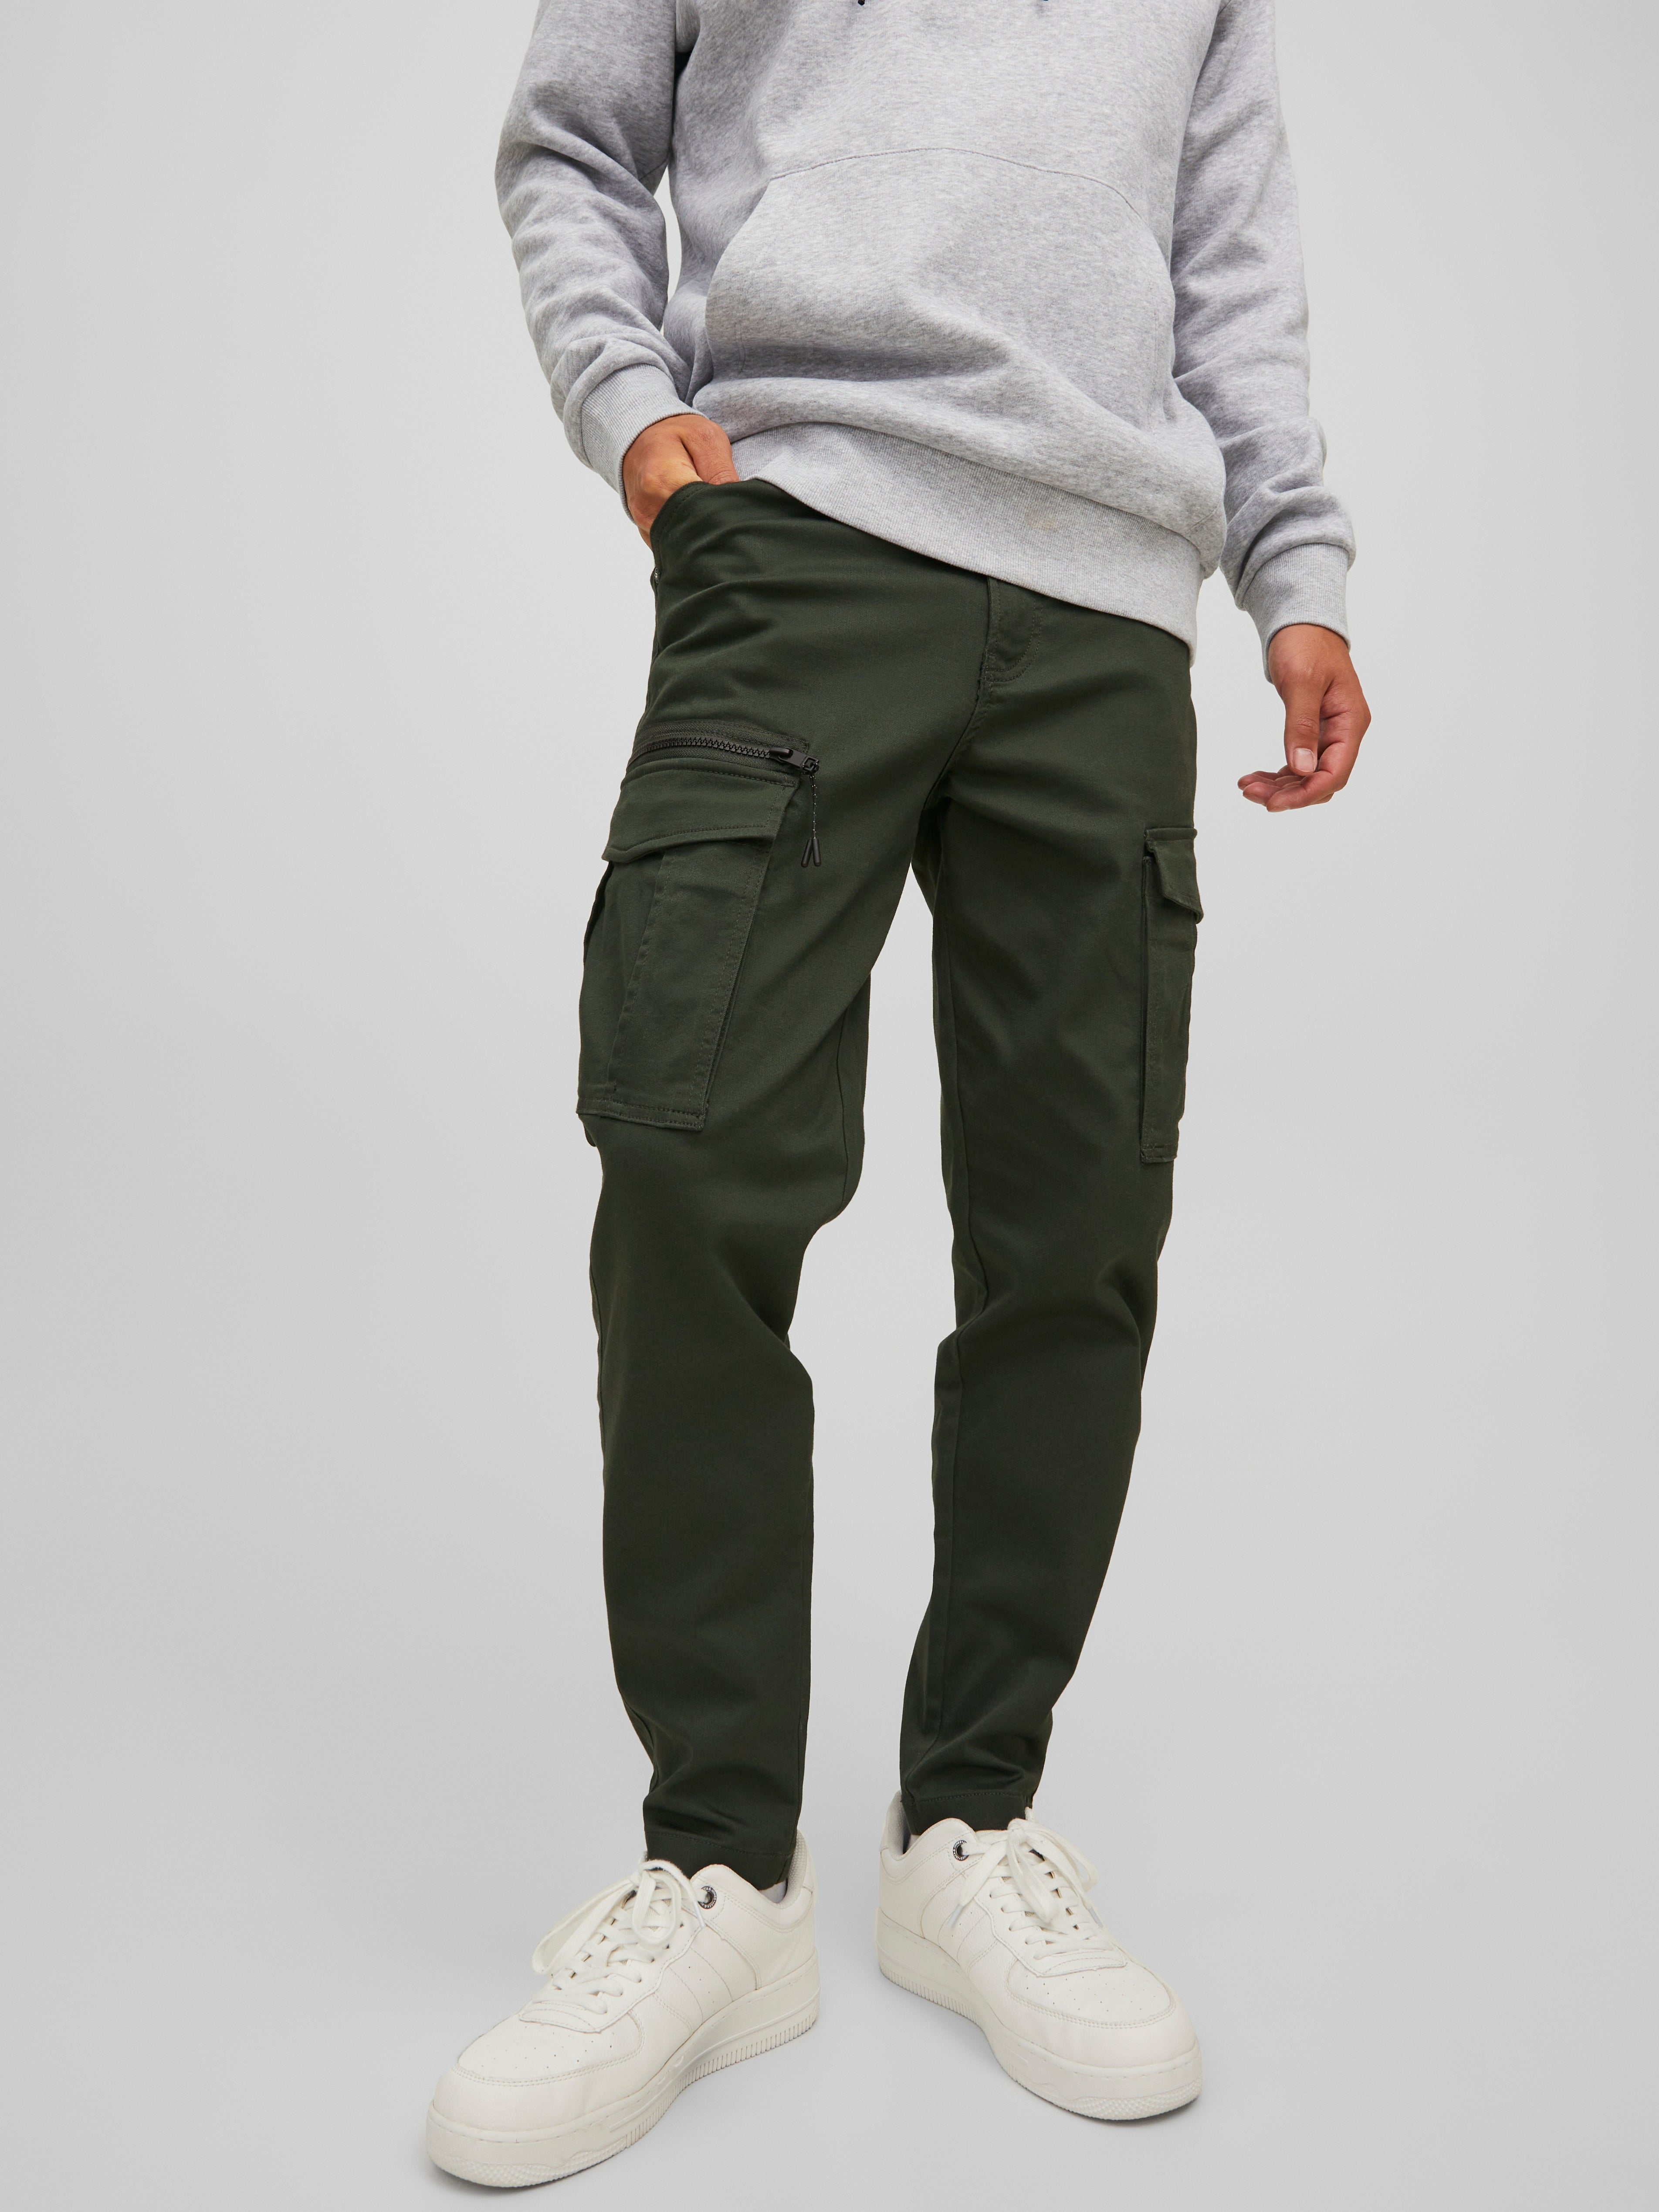 MEN FASHION Trousers Casual Rox slacks Green XXL discount 68% 